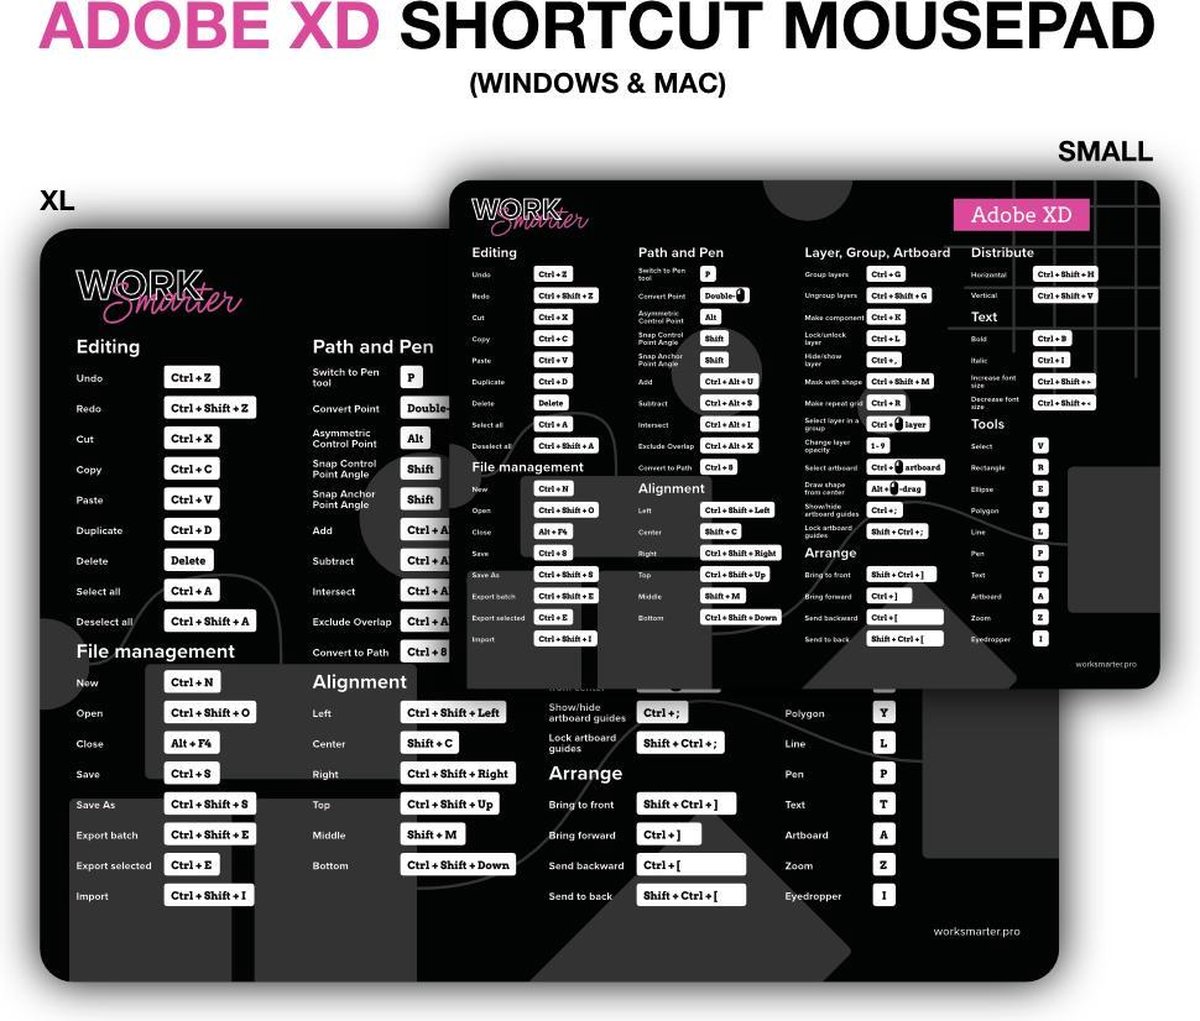 Adobe XD Shortcut Mousepad - XL - Windows